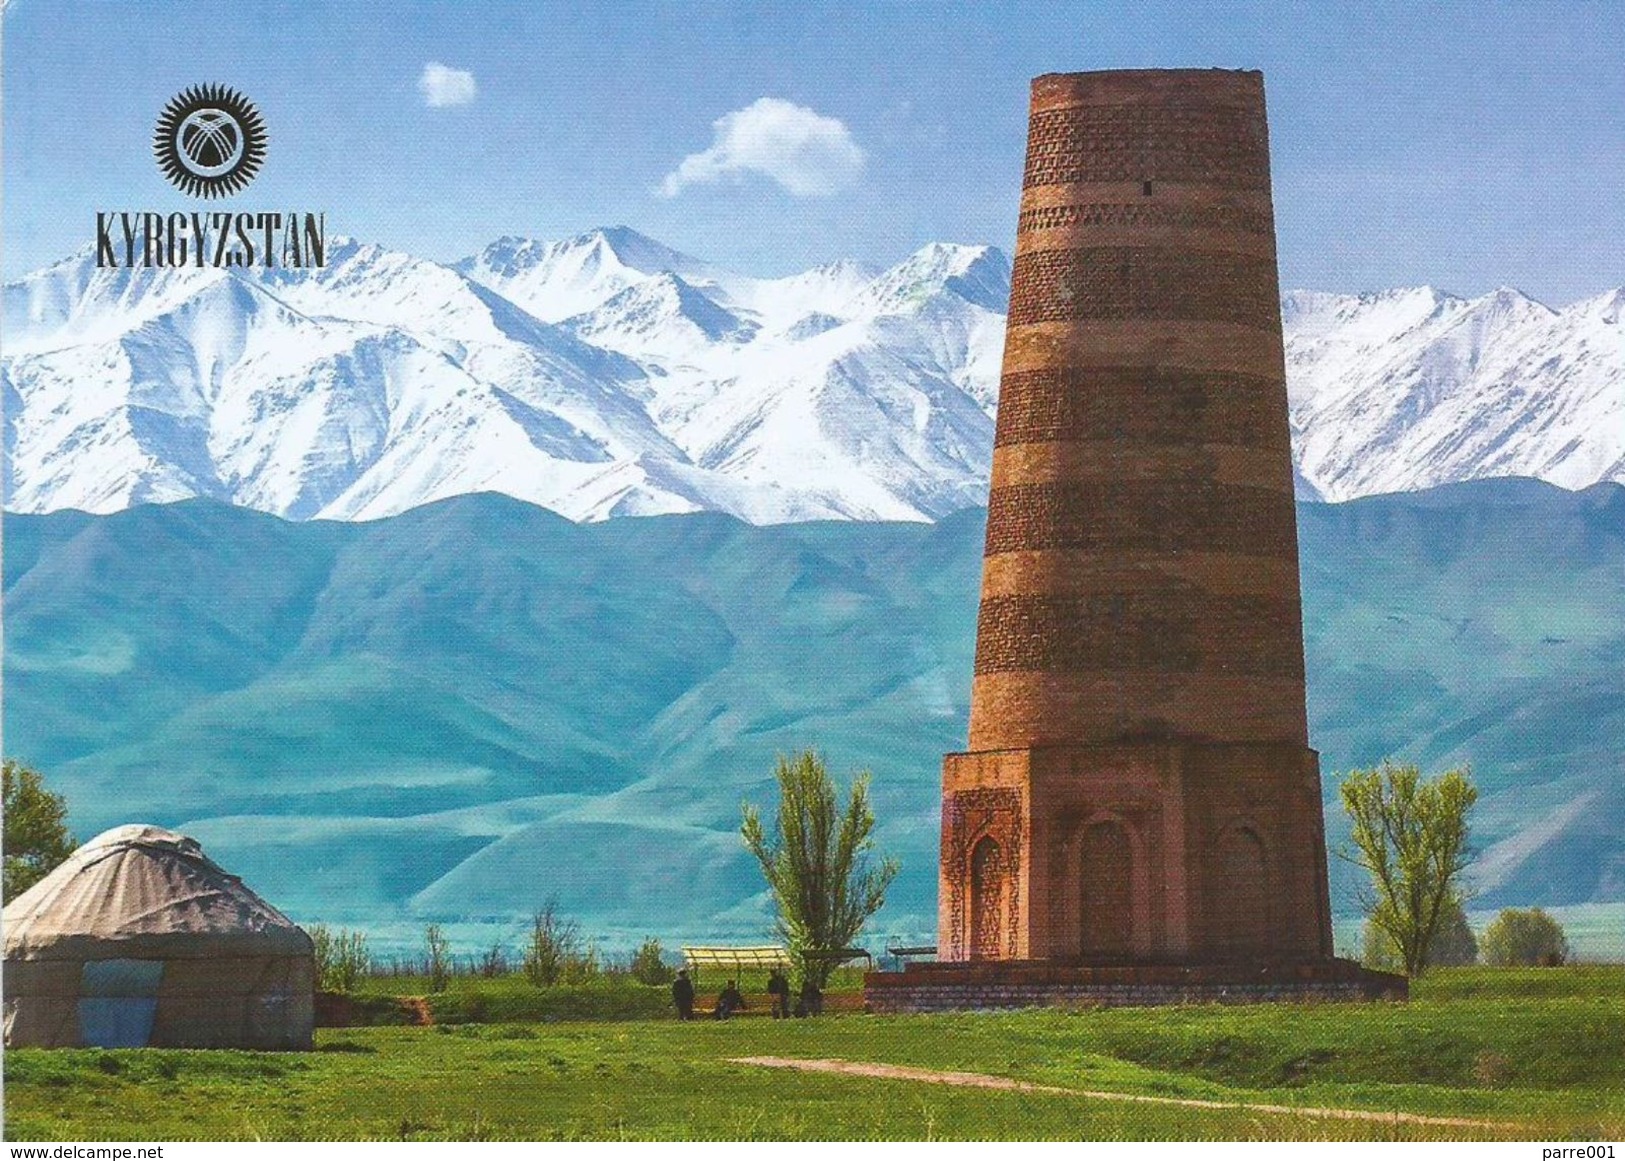 Kyrgyzstan 2017 Bishkek Map Cartography 11th Century Burana Tower Mountains Code 02 Postal Stationary Card - Kyrgyzstan